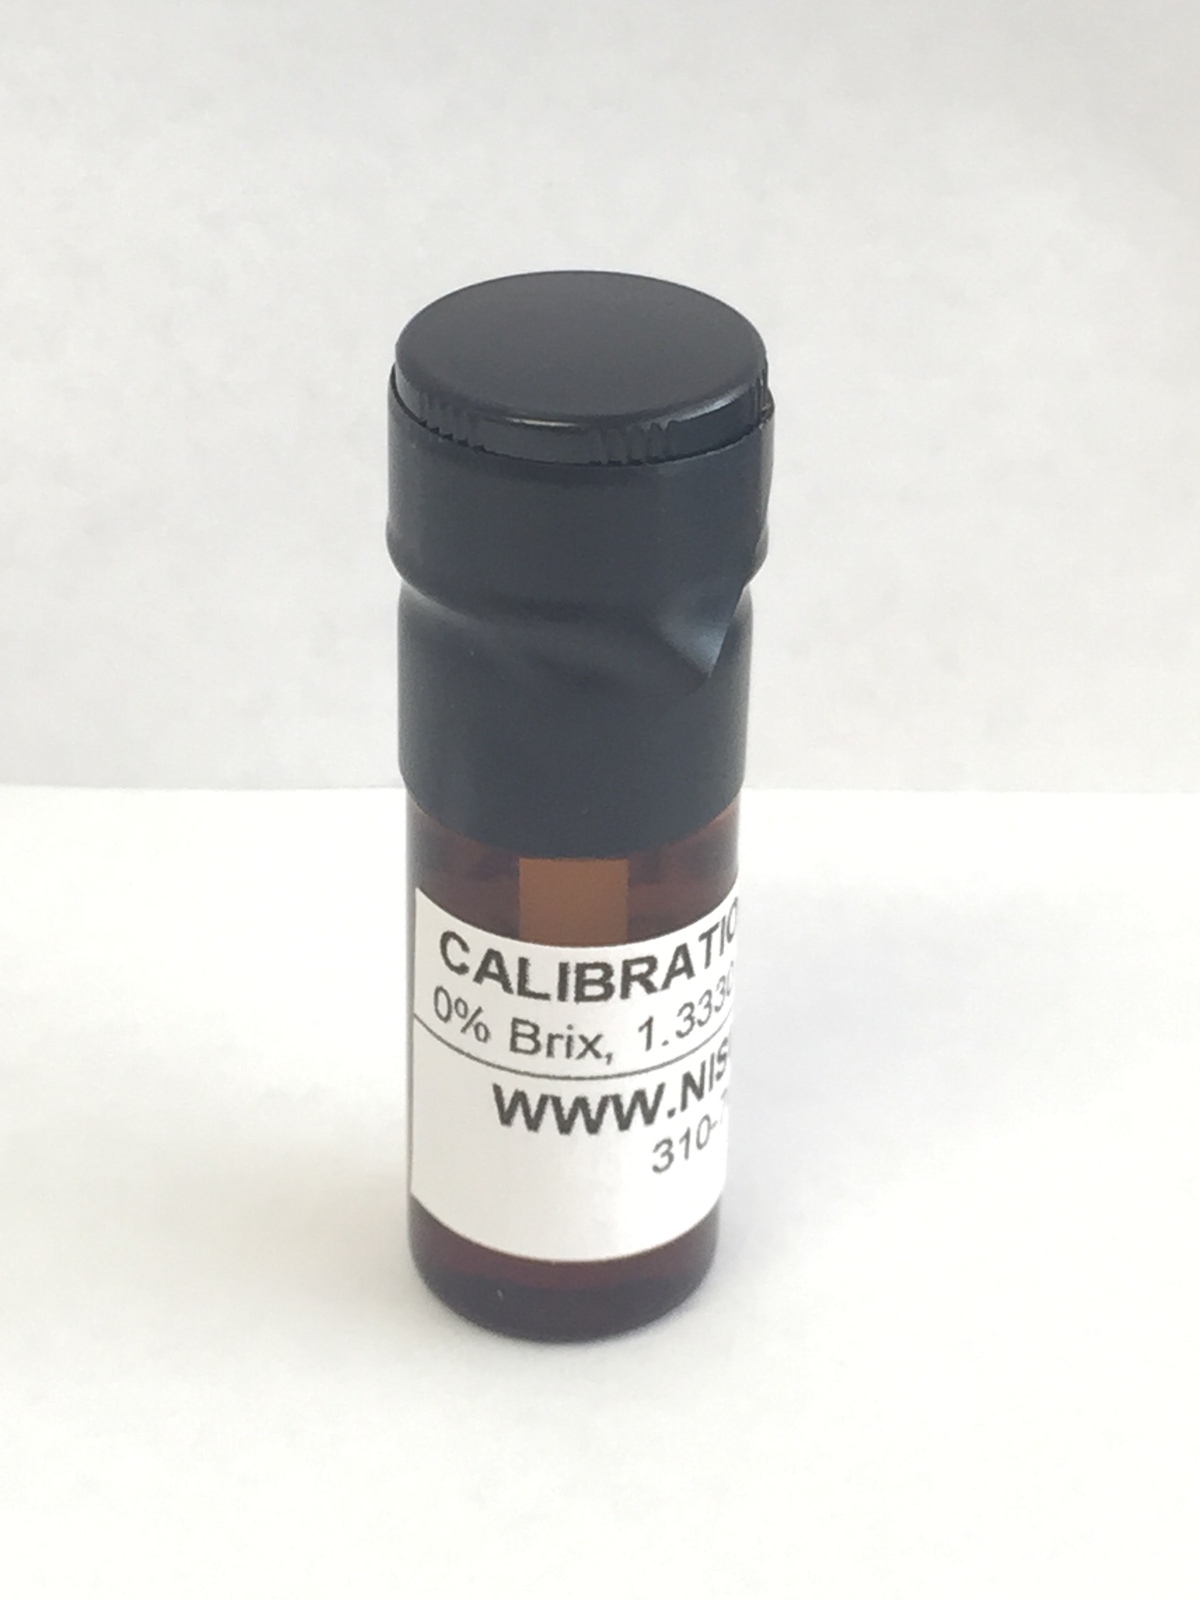 $8.85 FREE S&H Calibration Fluid Liquid Brix Salinity Clinical Refractometer - $8.85